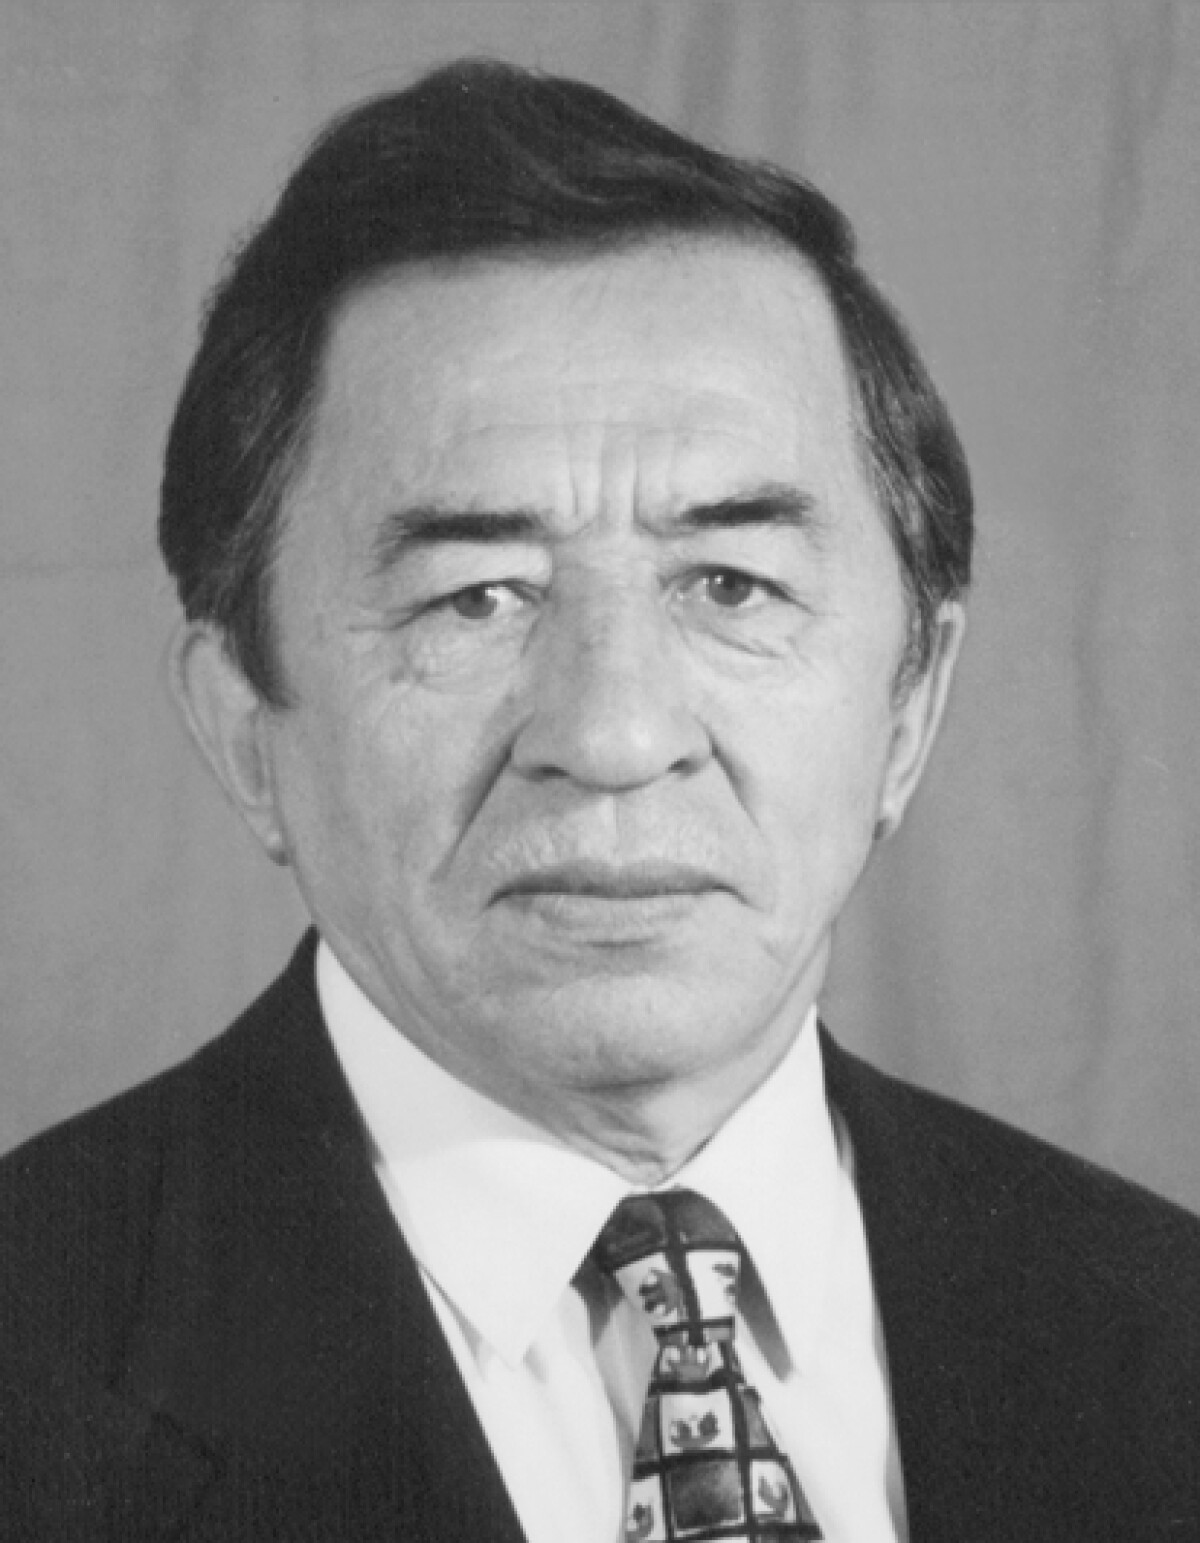 Ахат Жақсыбаев